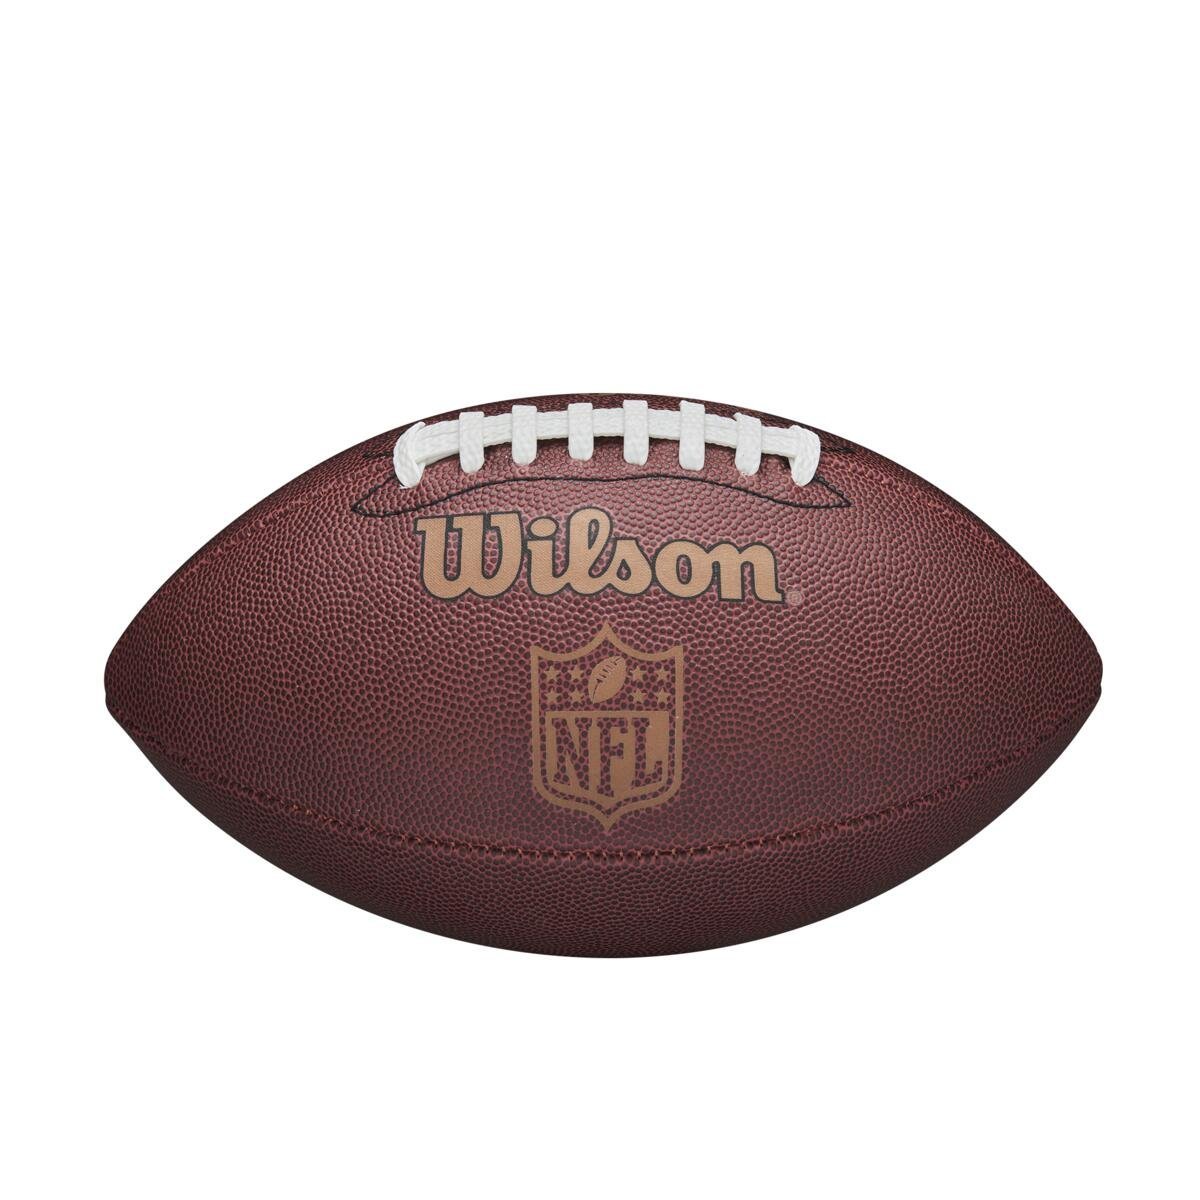 Lopta Wilson NFL Ignition - hnedá